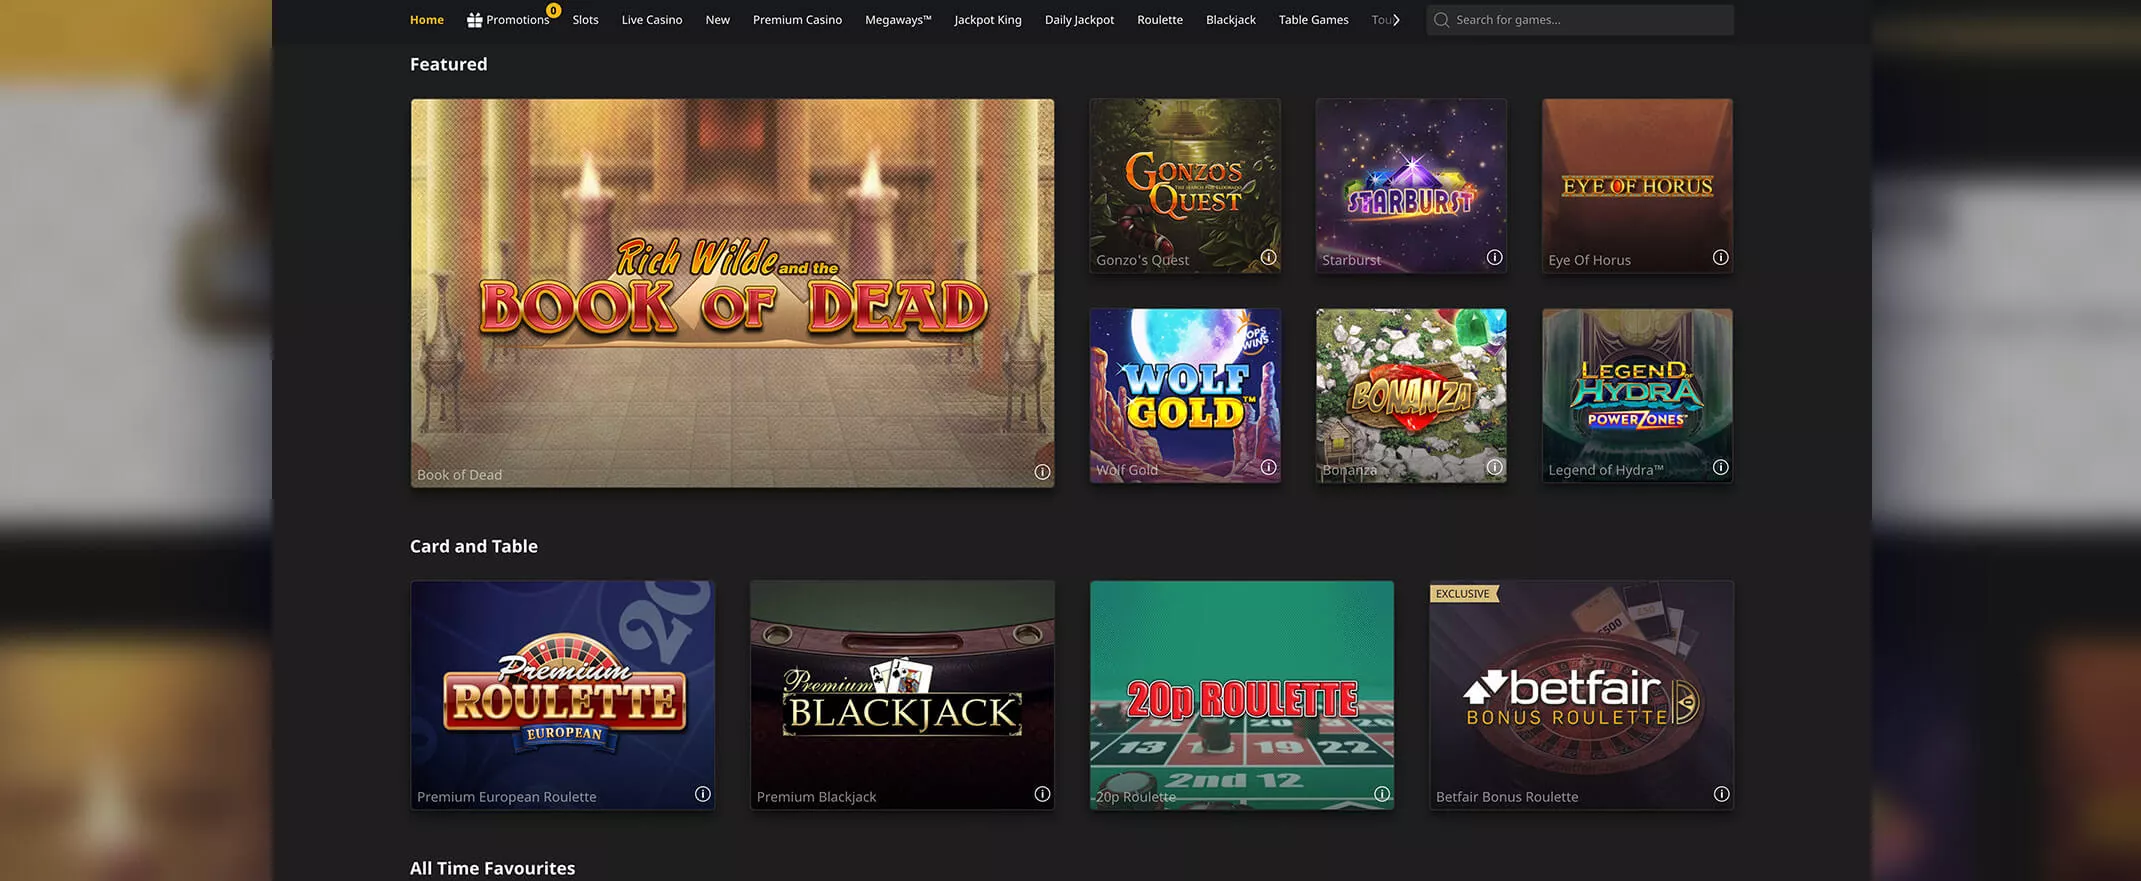 Betfair Casino screenshot of the games